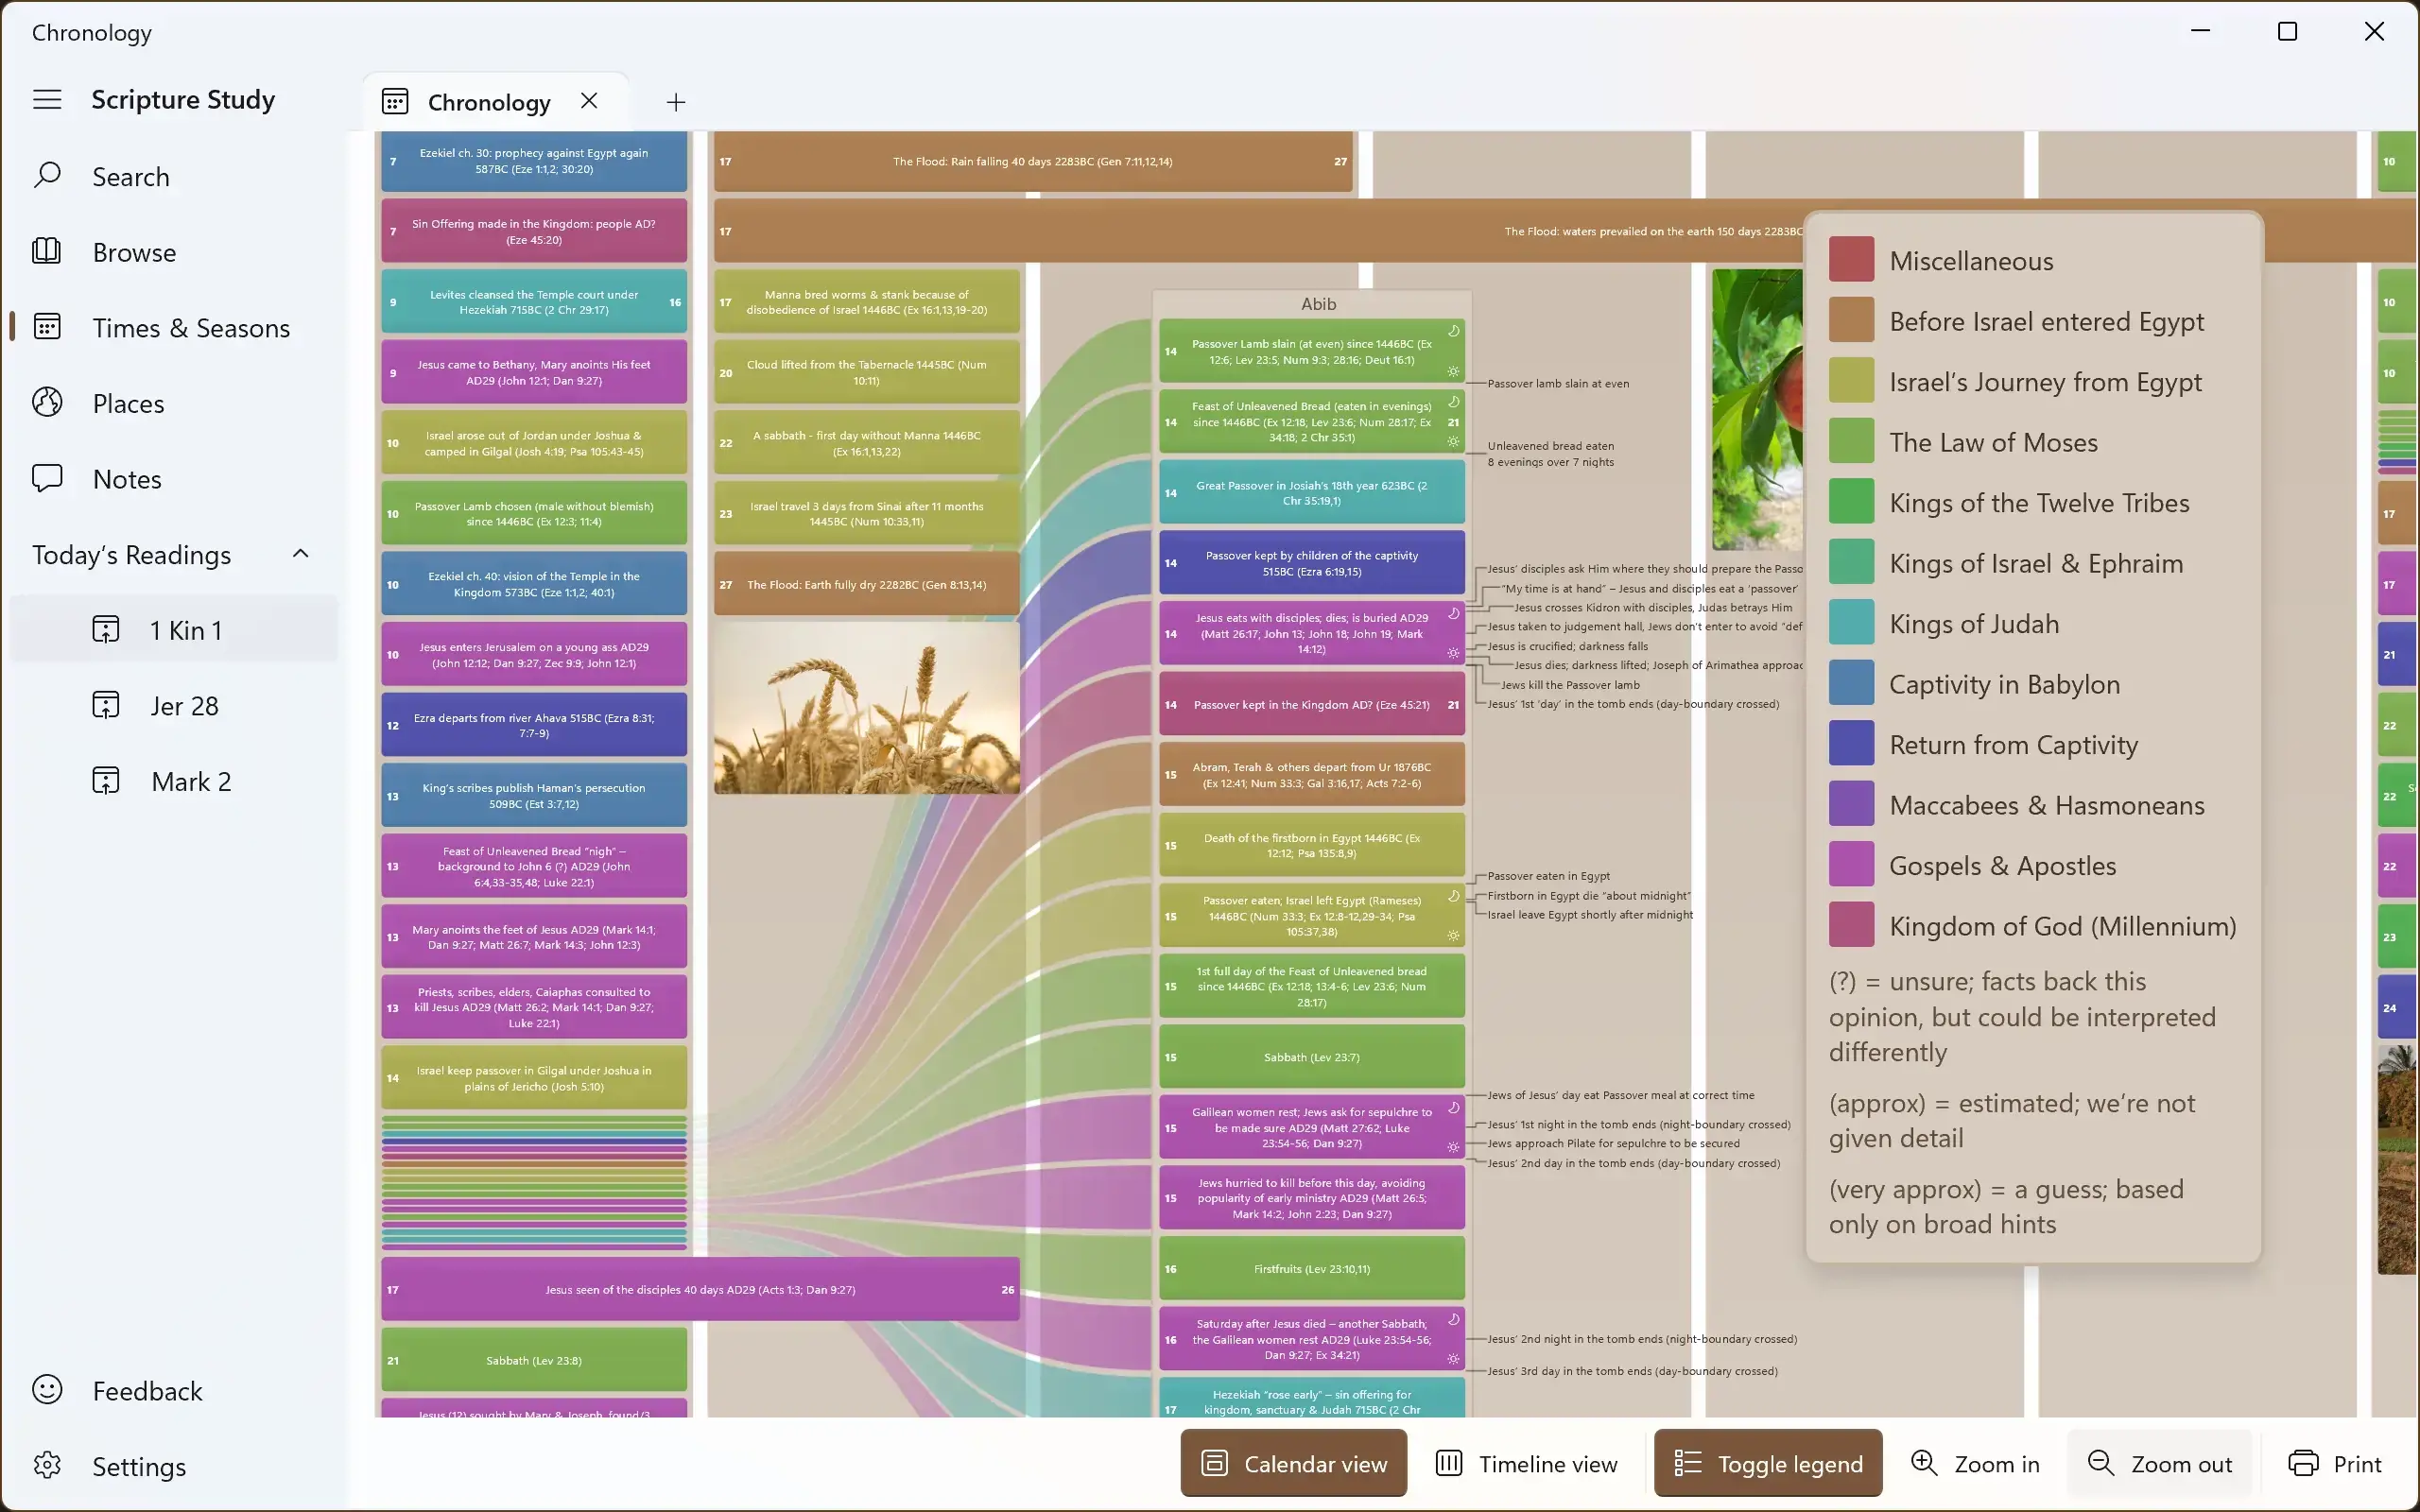 Screenshot showing a calendar view of Bible events